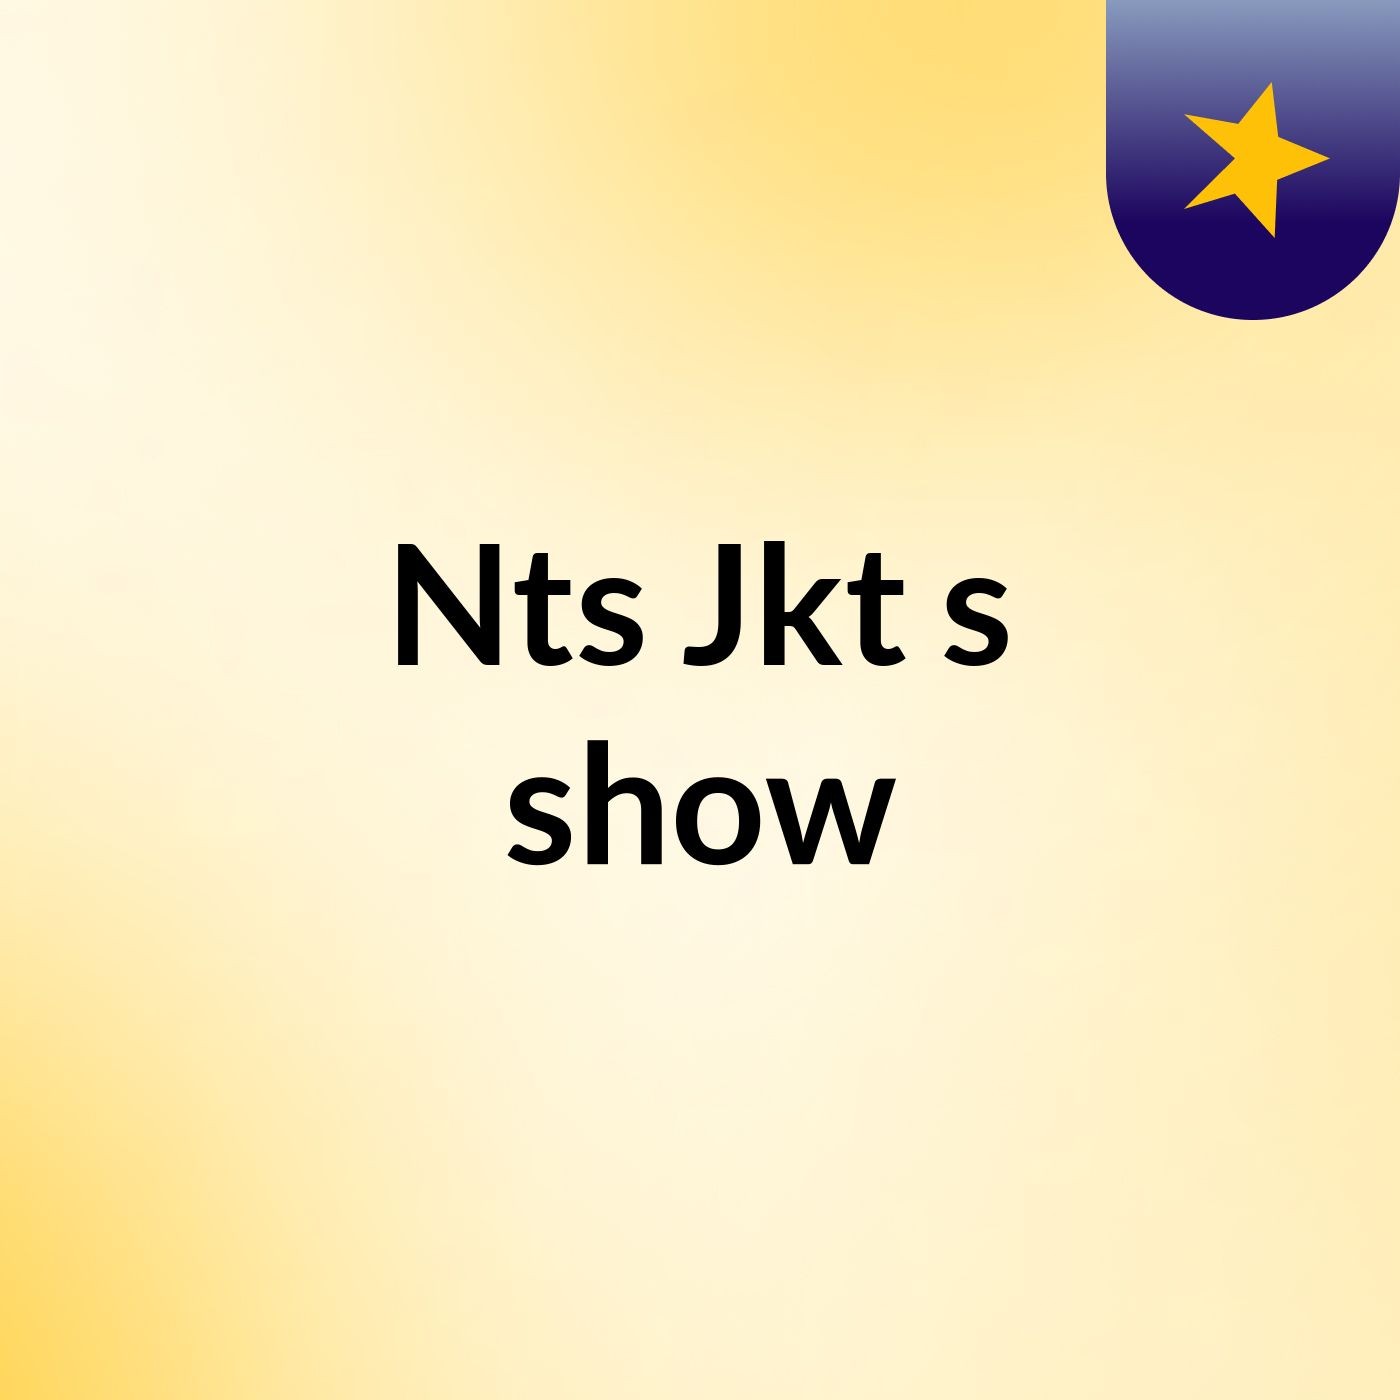 Nts Jkt's show